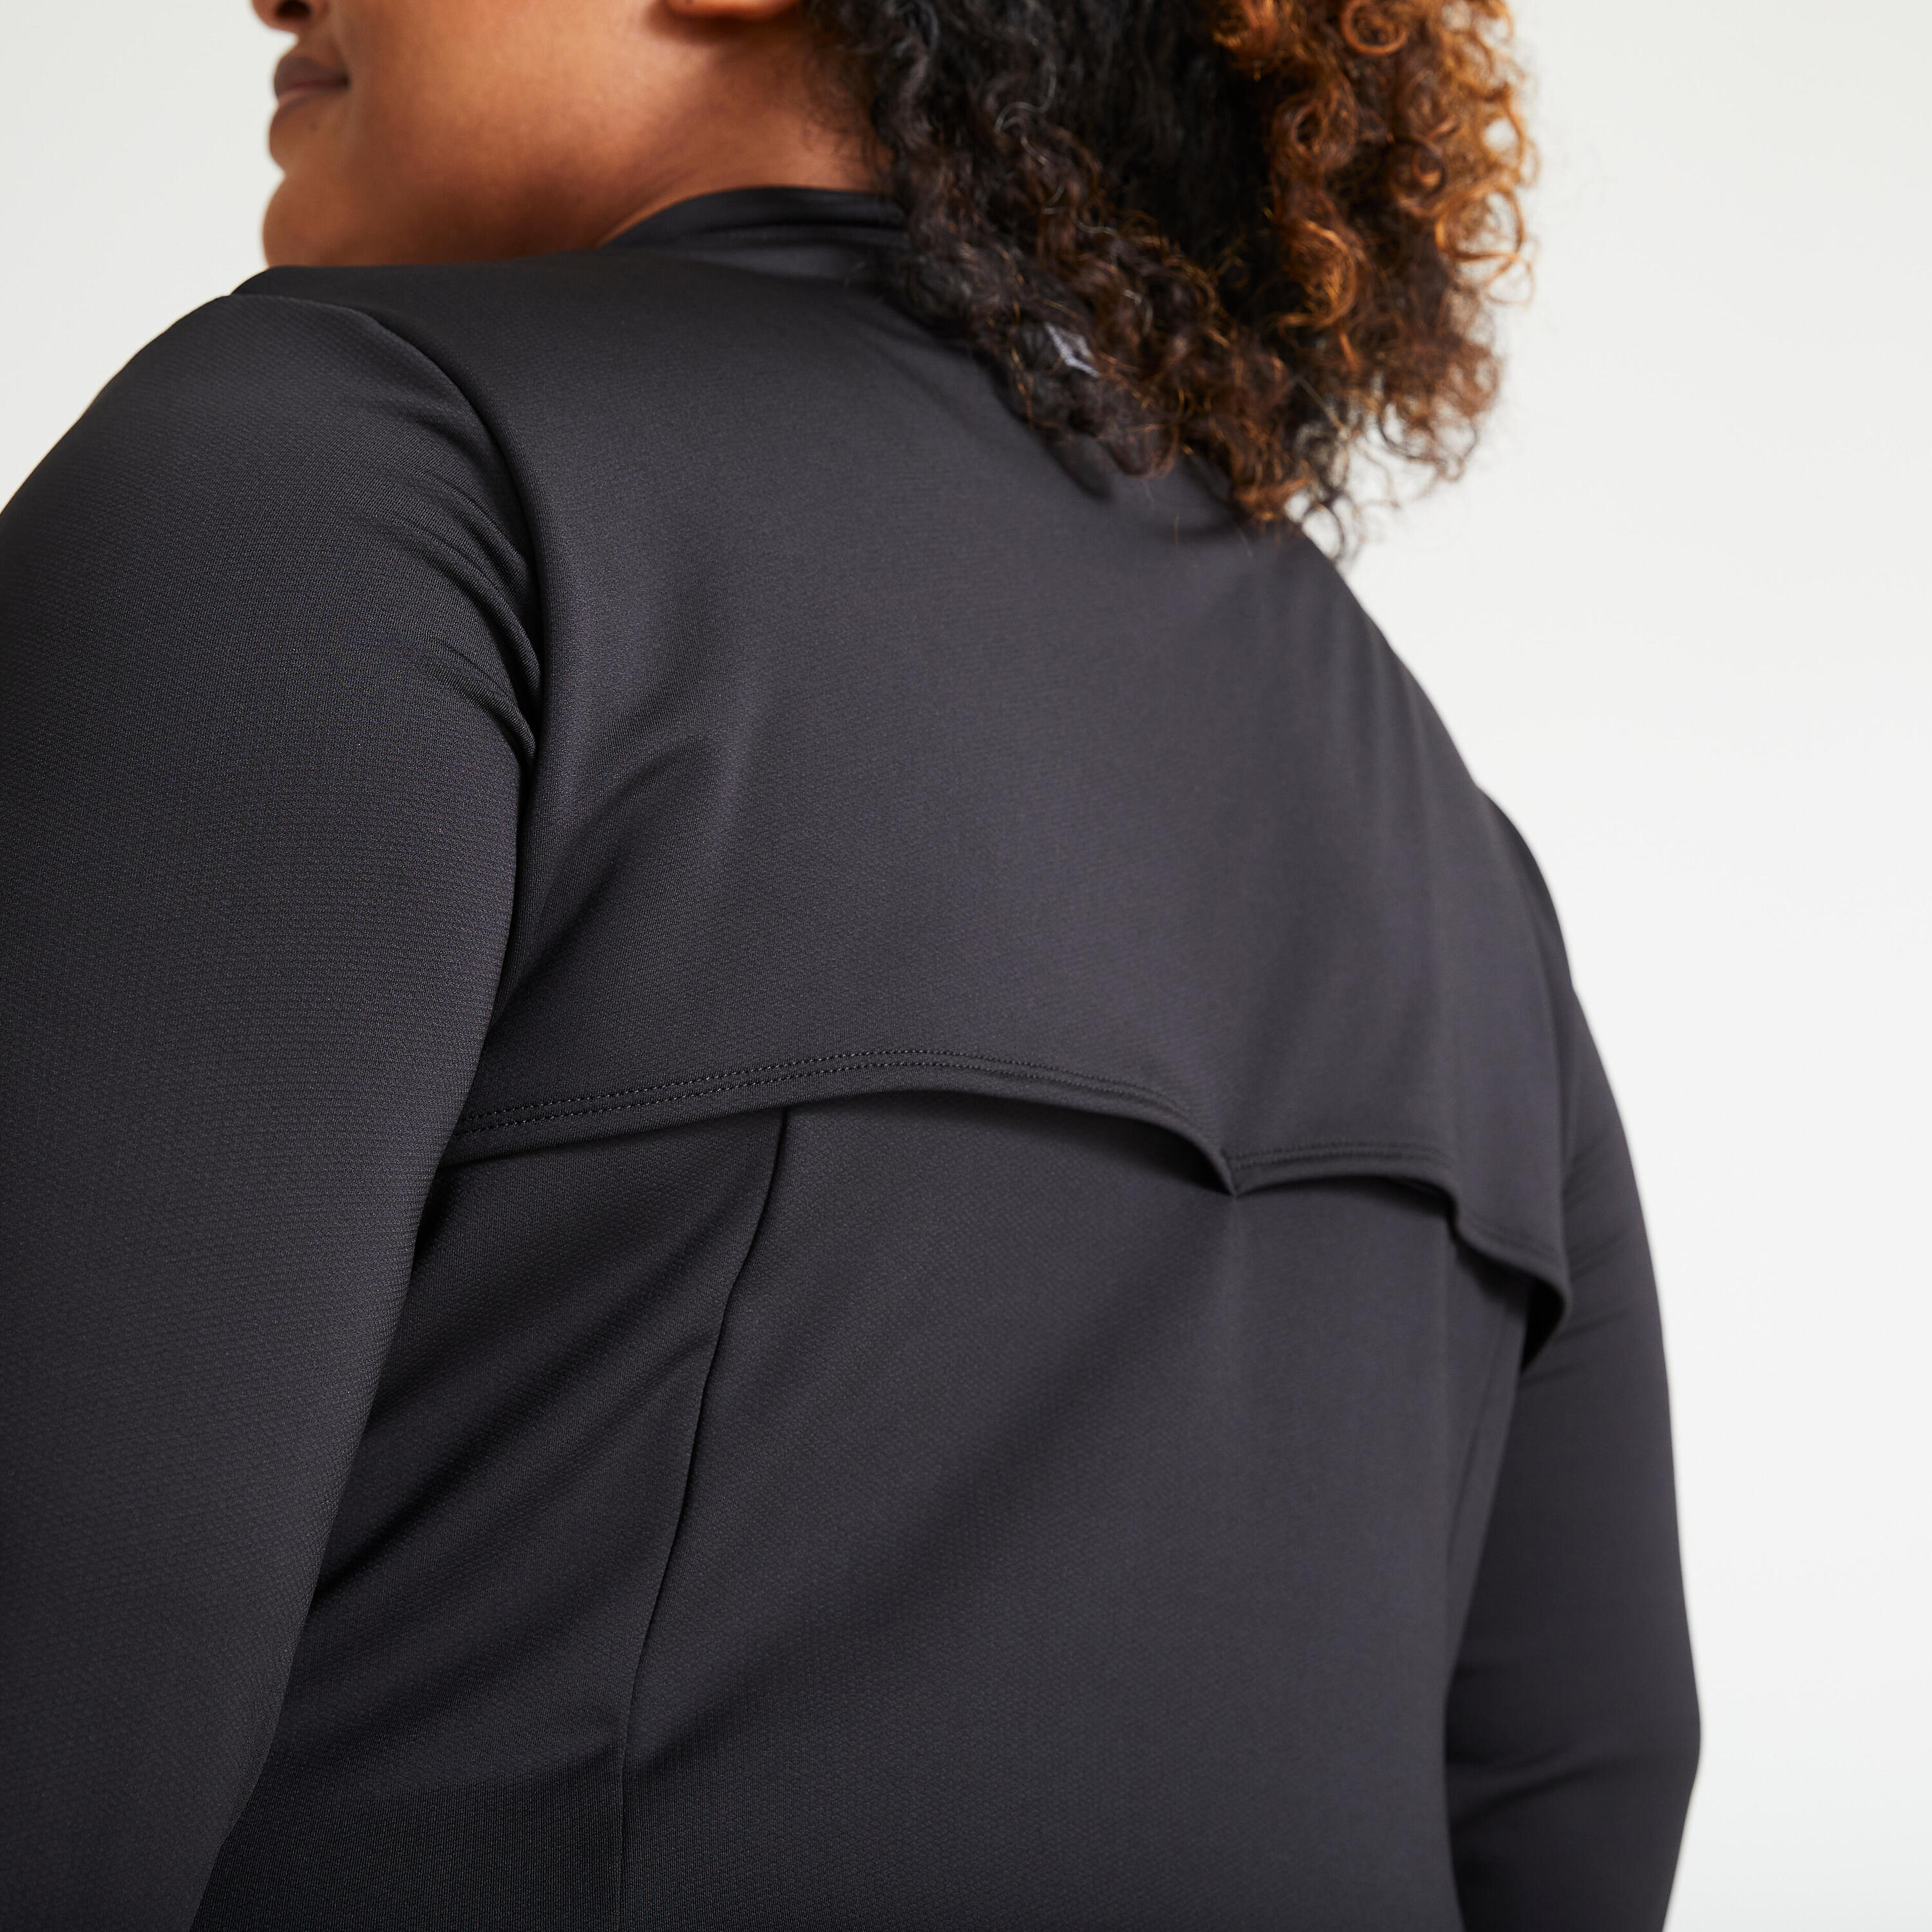 Women's Large Straight-Cut Fitness Cardio Jacket - Black 5/6